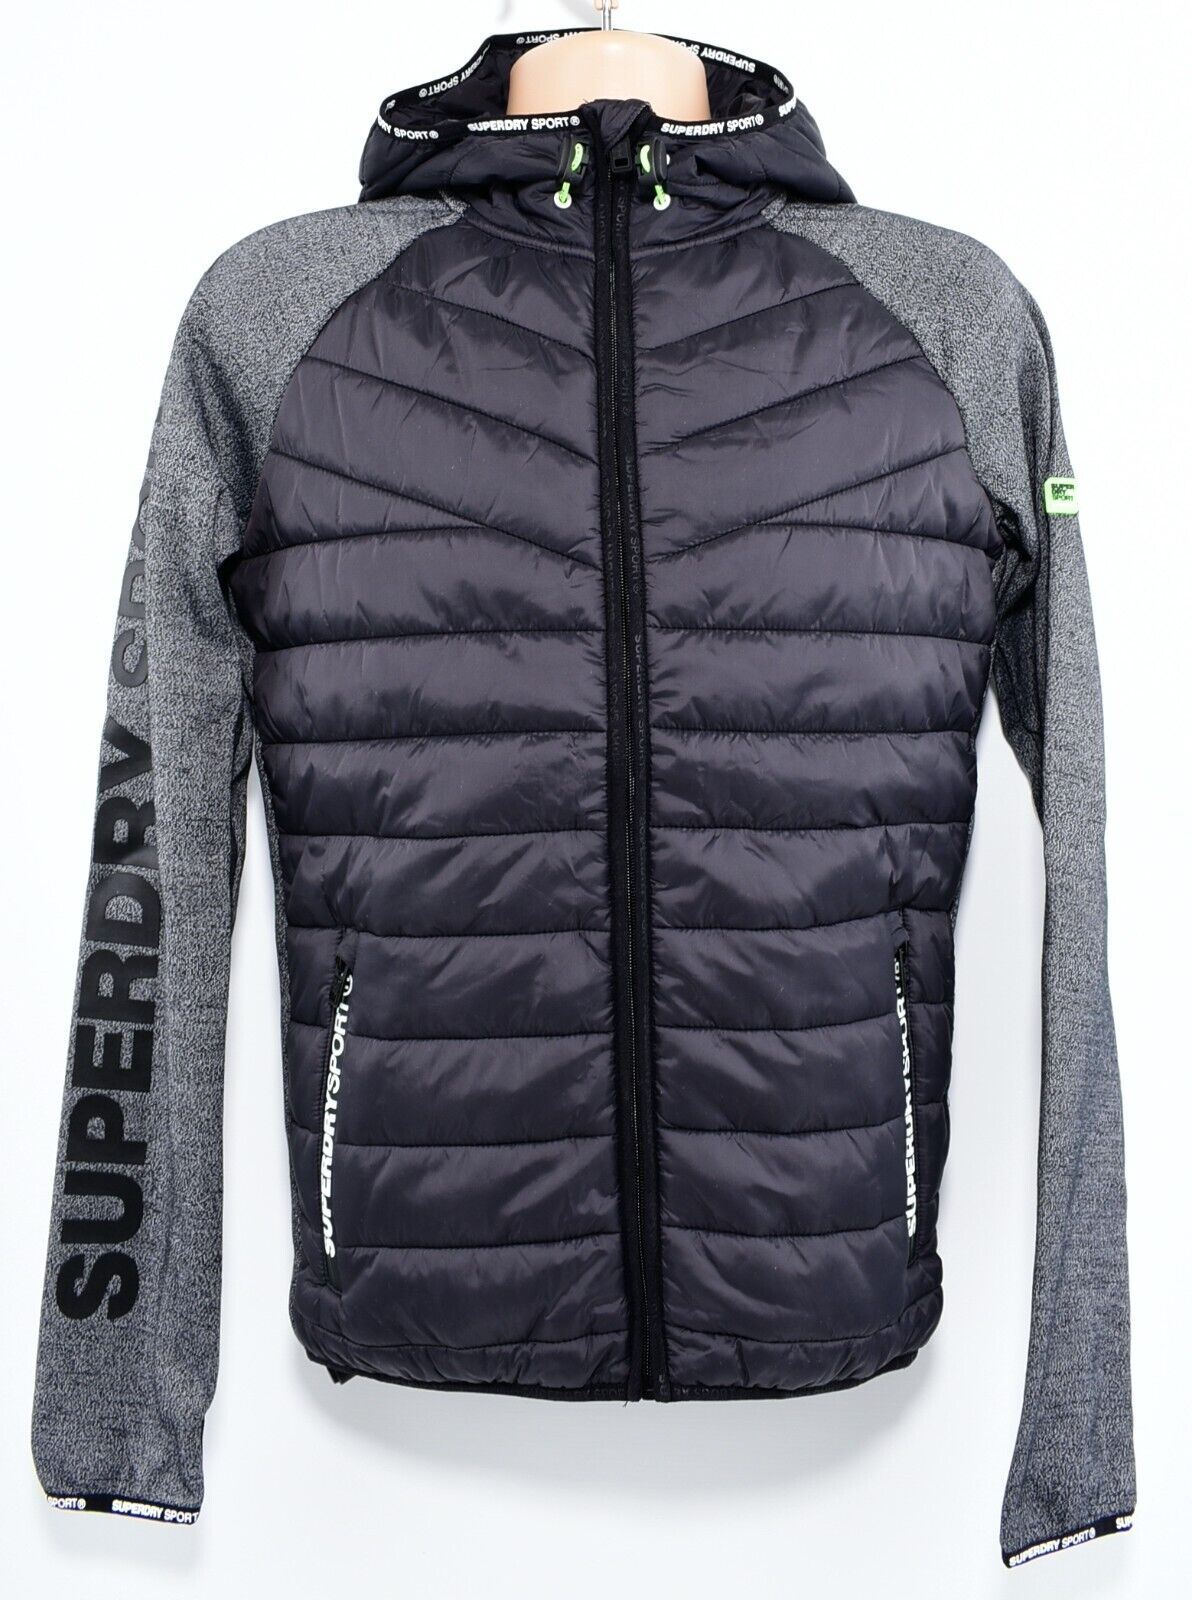 SUPERDRY Mens Gym Tech Hybrid Ziphood Jacket, Grey/Black, size XS - 34"